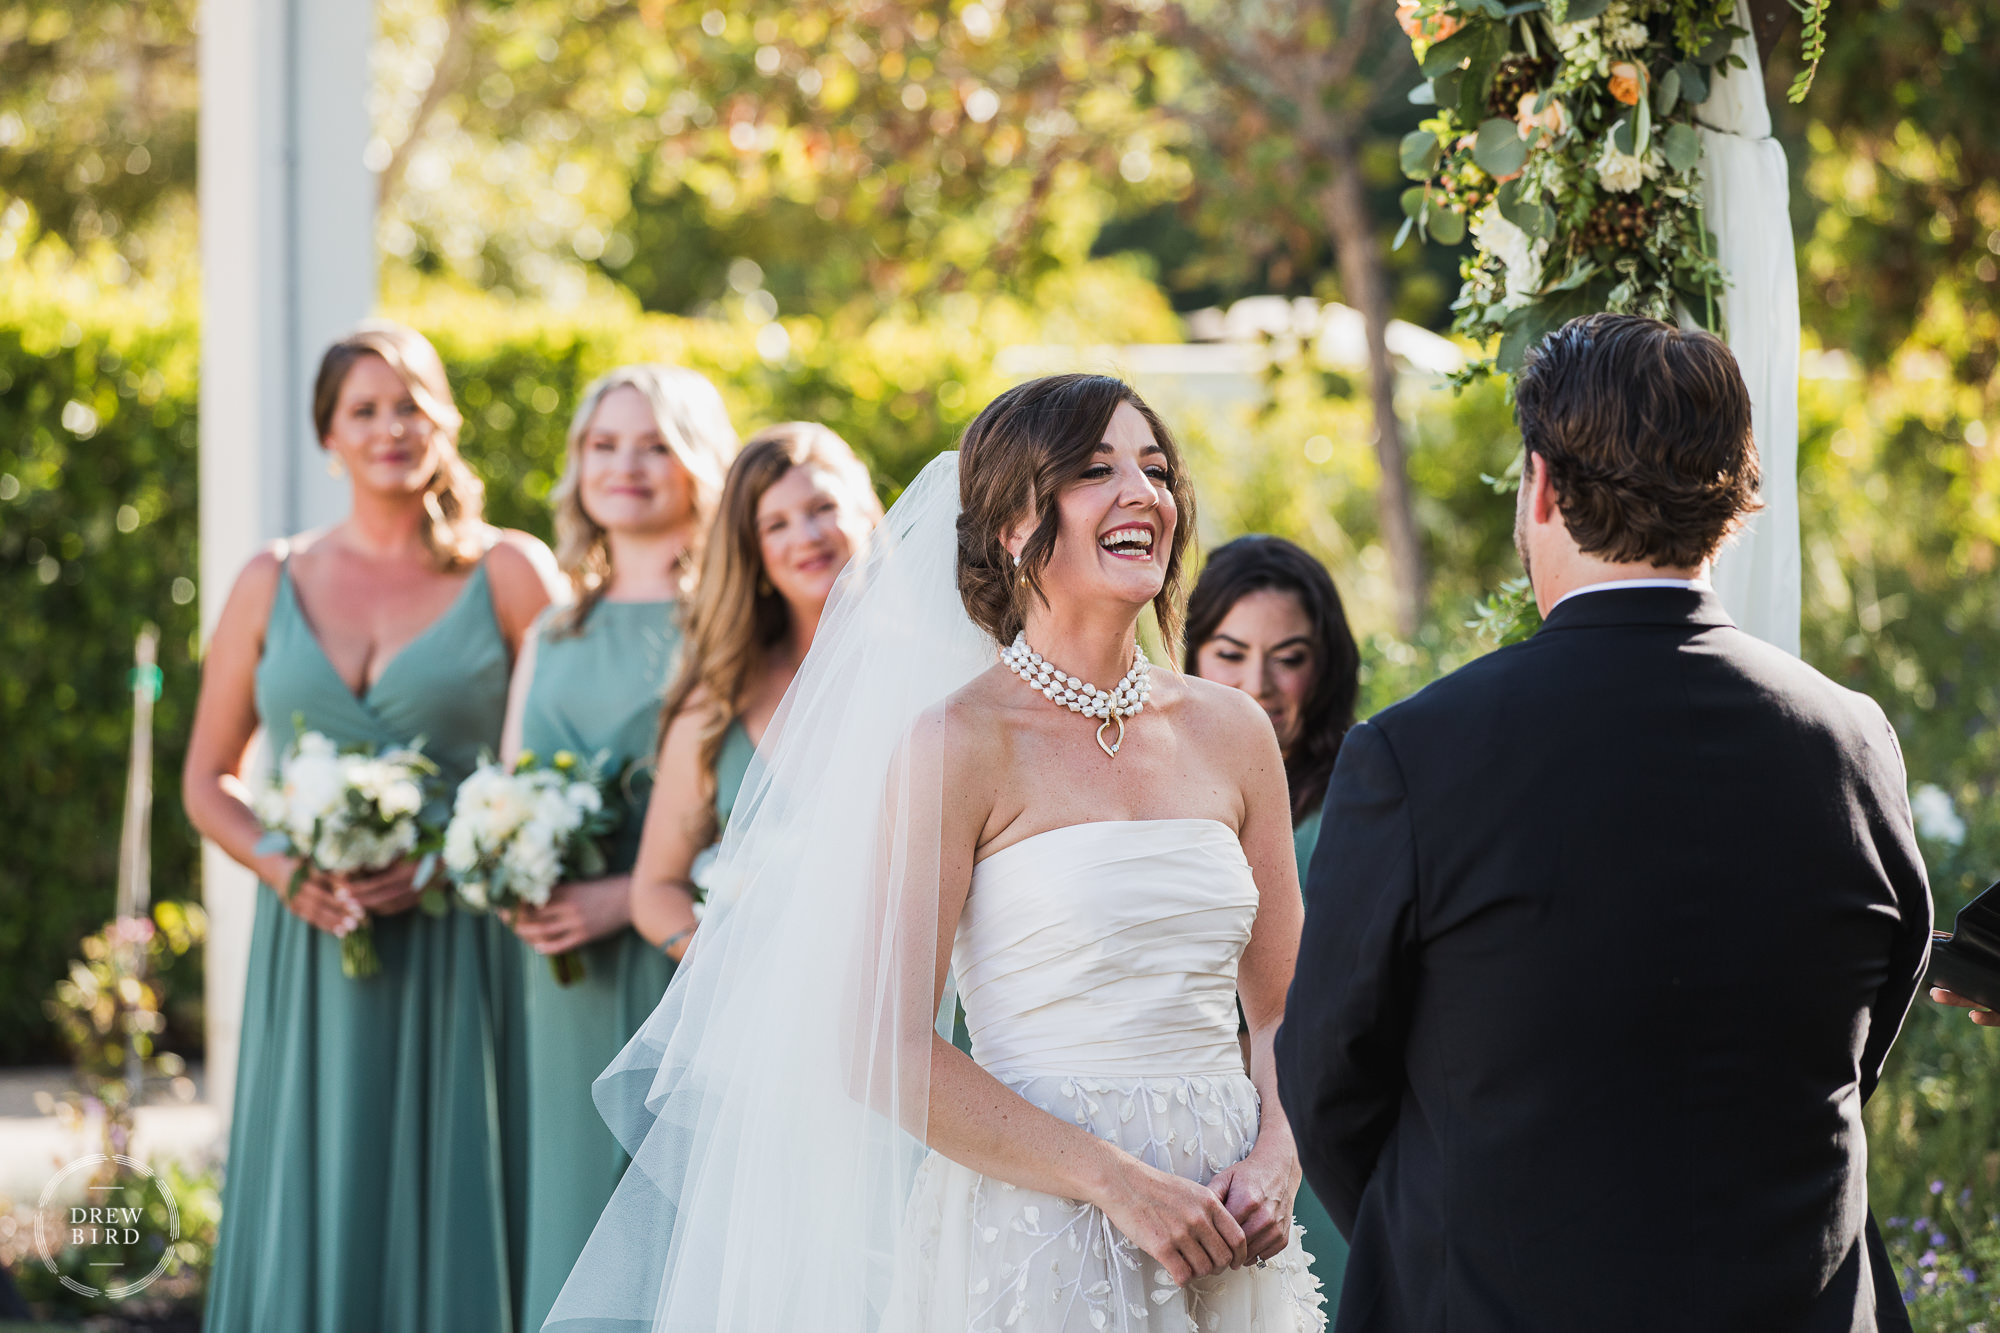 Bride laughing during ceremony. Solage Auberge Resort wedding venue in Napa, California.